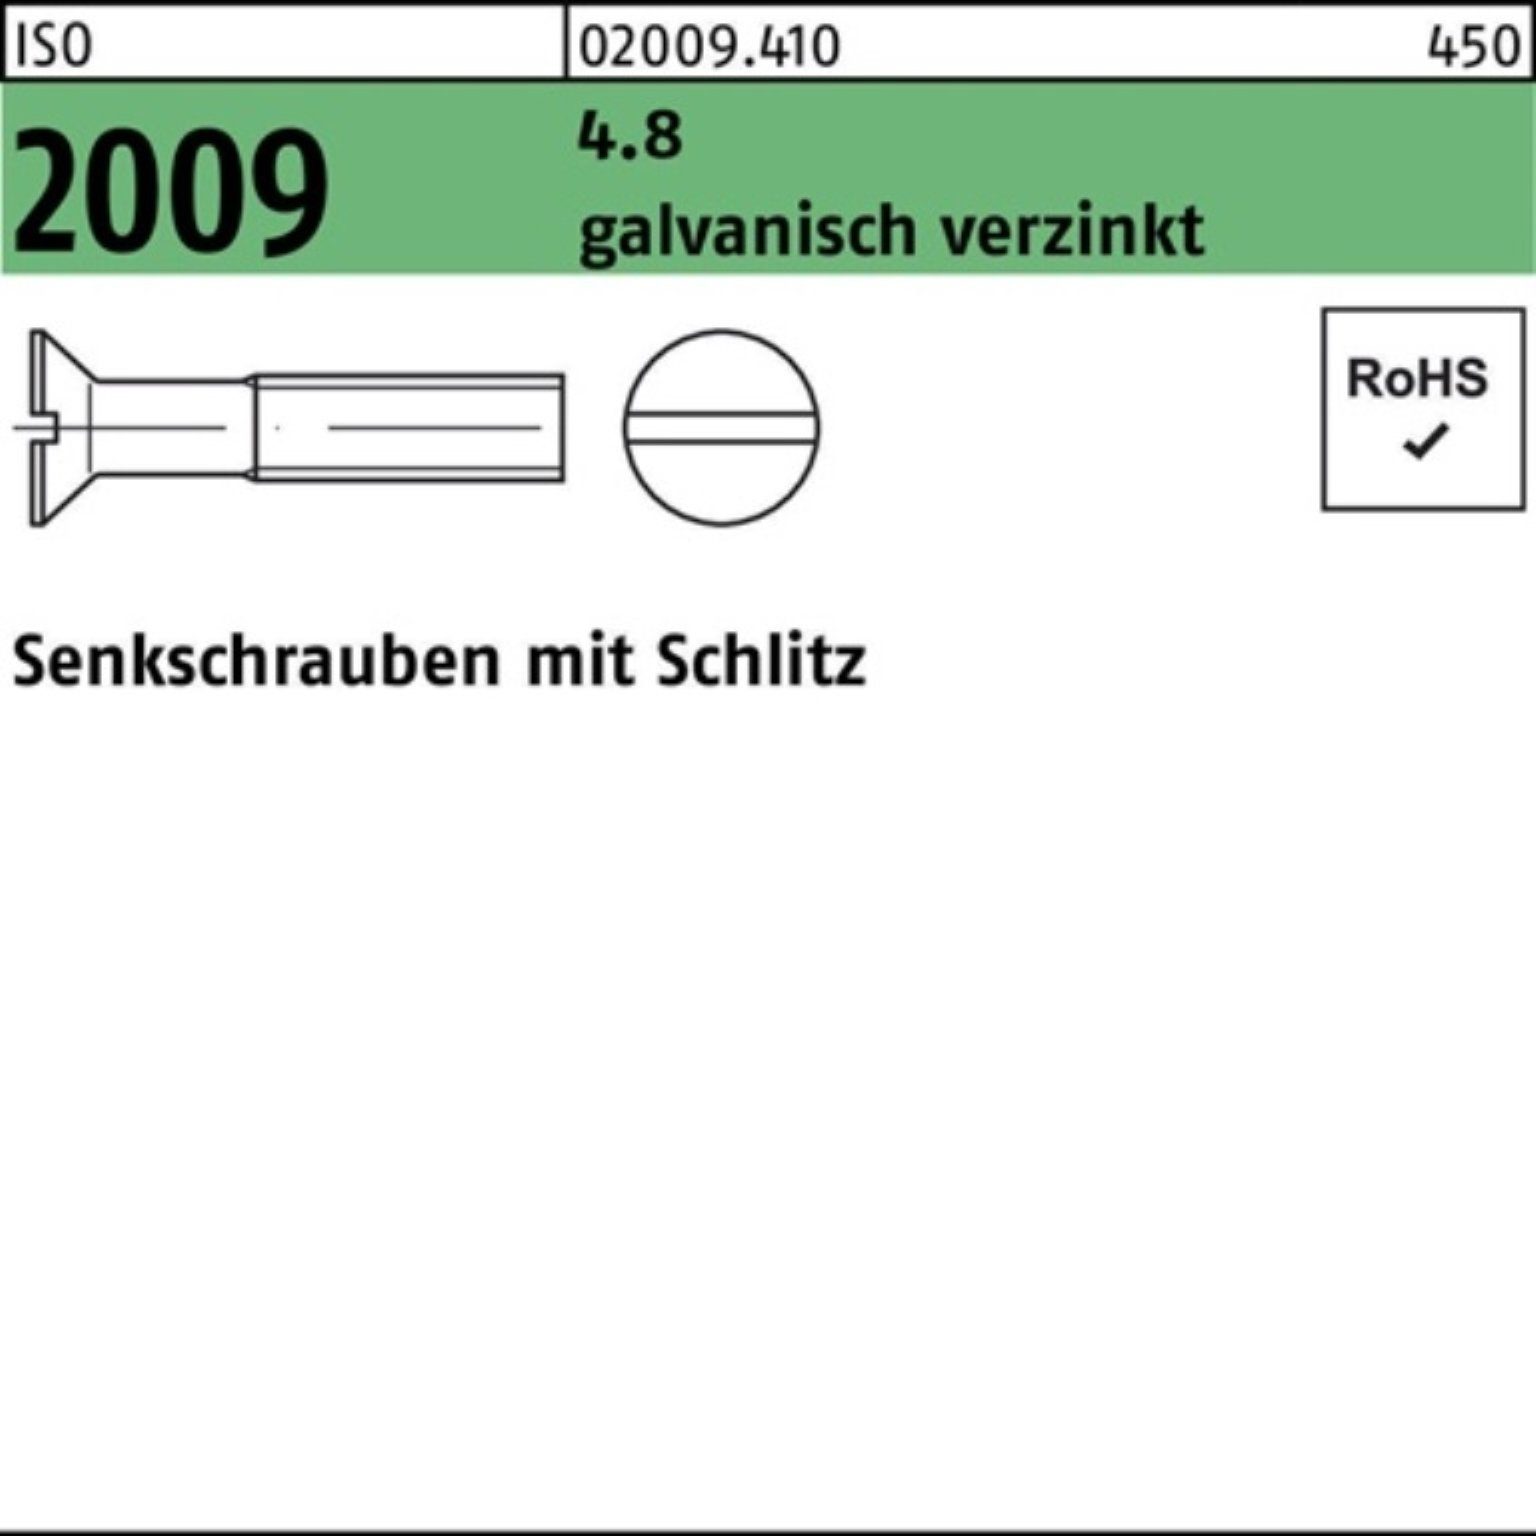 4.8 St Schlitz 200er Pack ISO Senkschraube 200 galv.verz. Reyher Senkschraube 2009 M6x 16